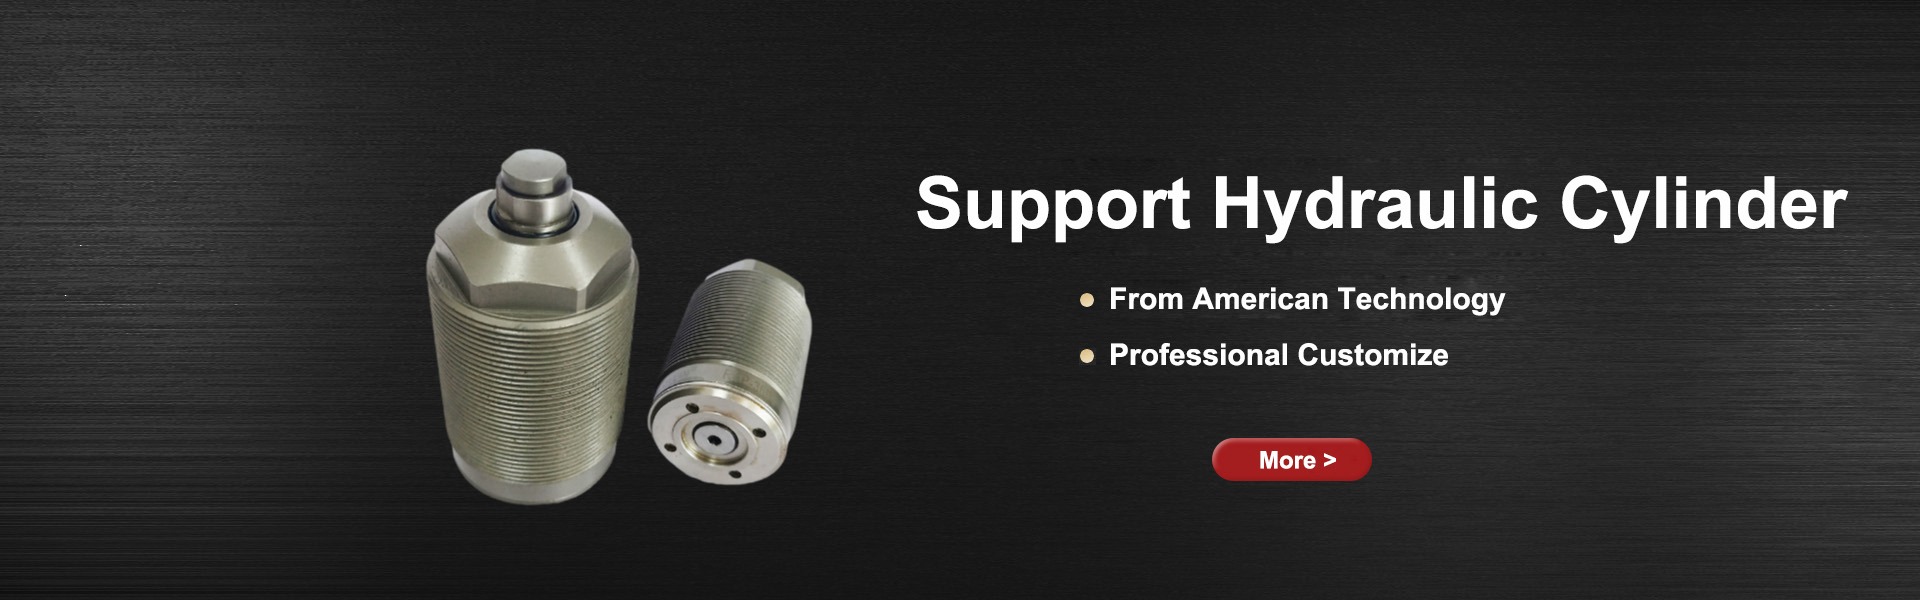 Support Hydraulic Clinder